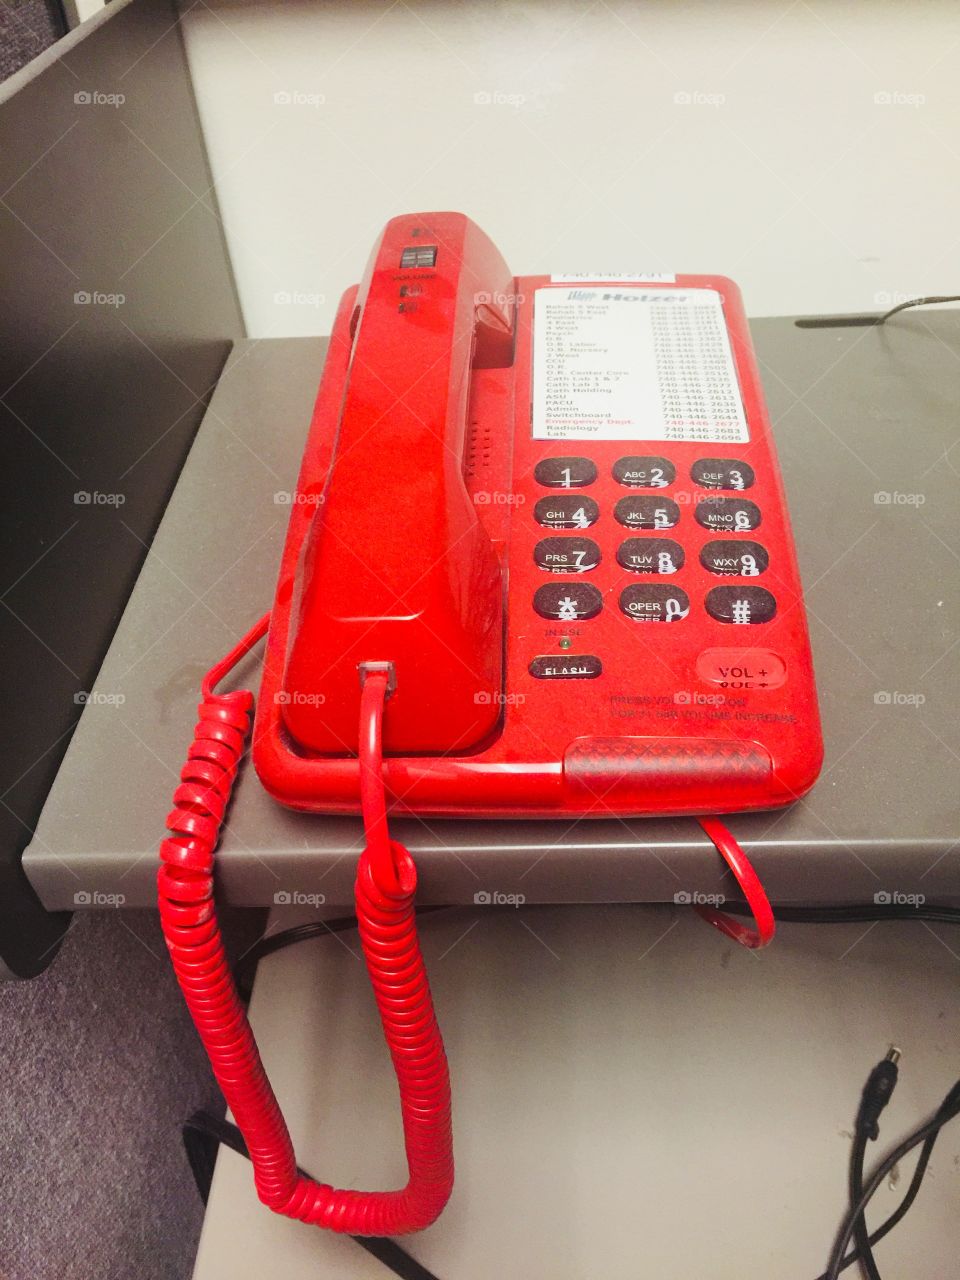 Emergency red phone